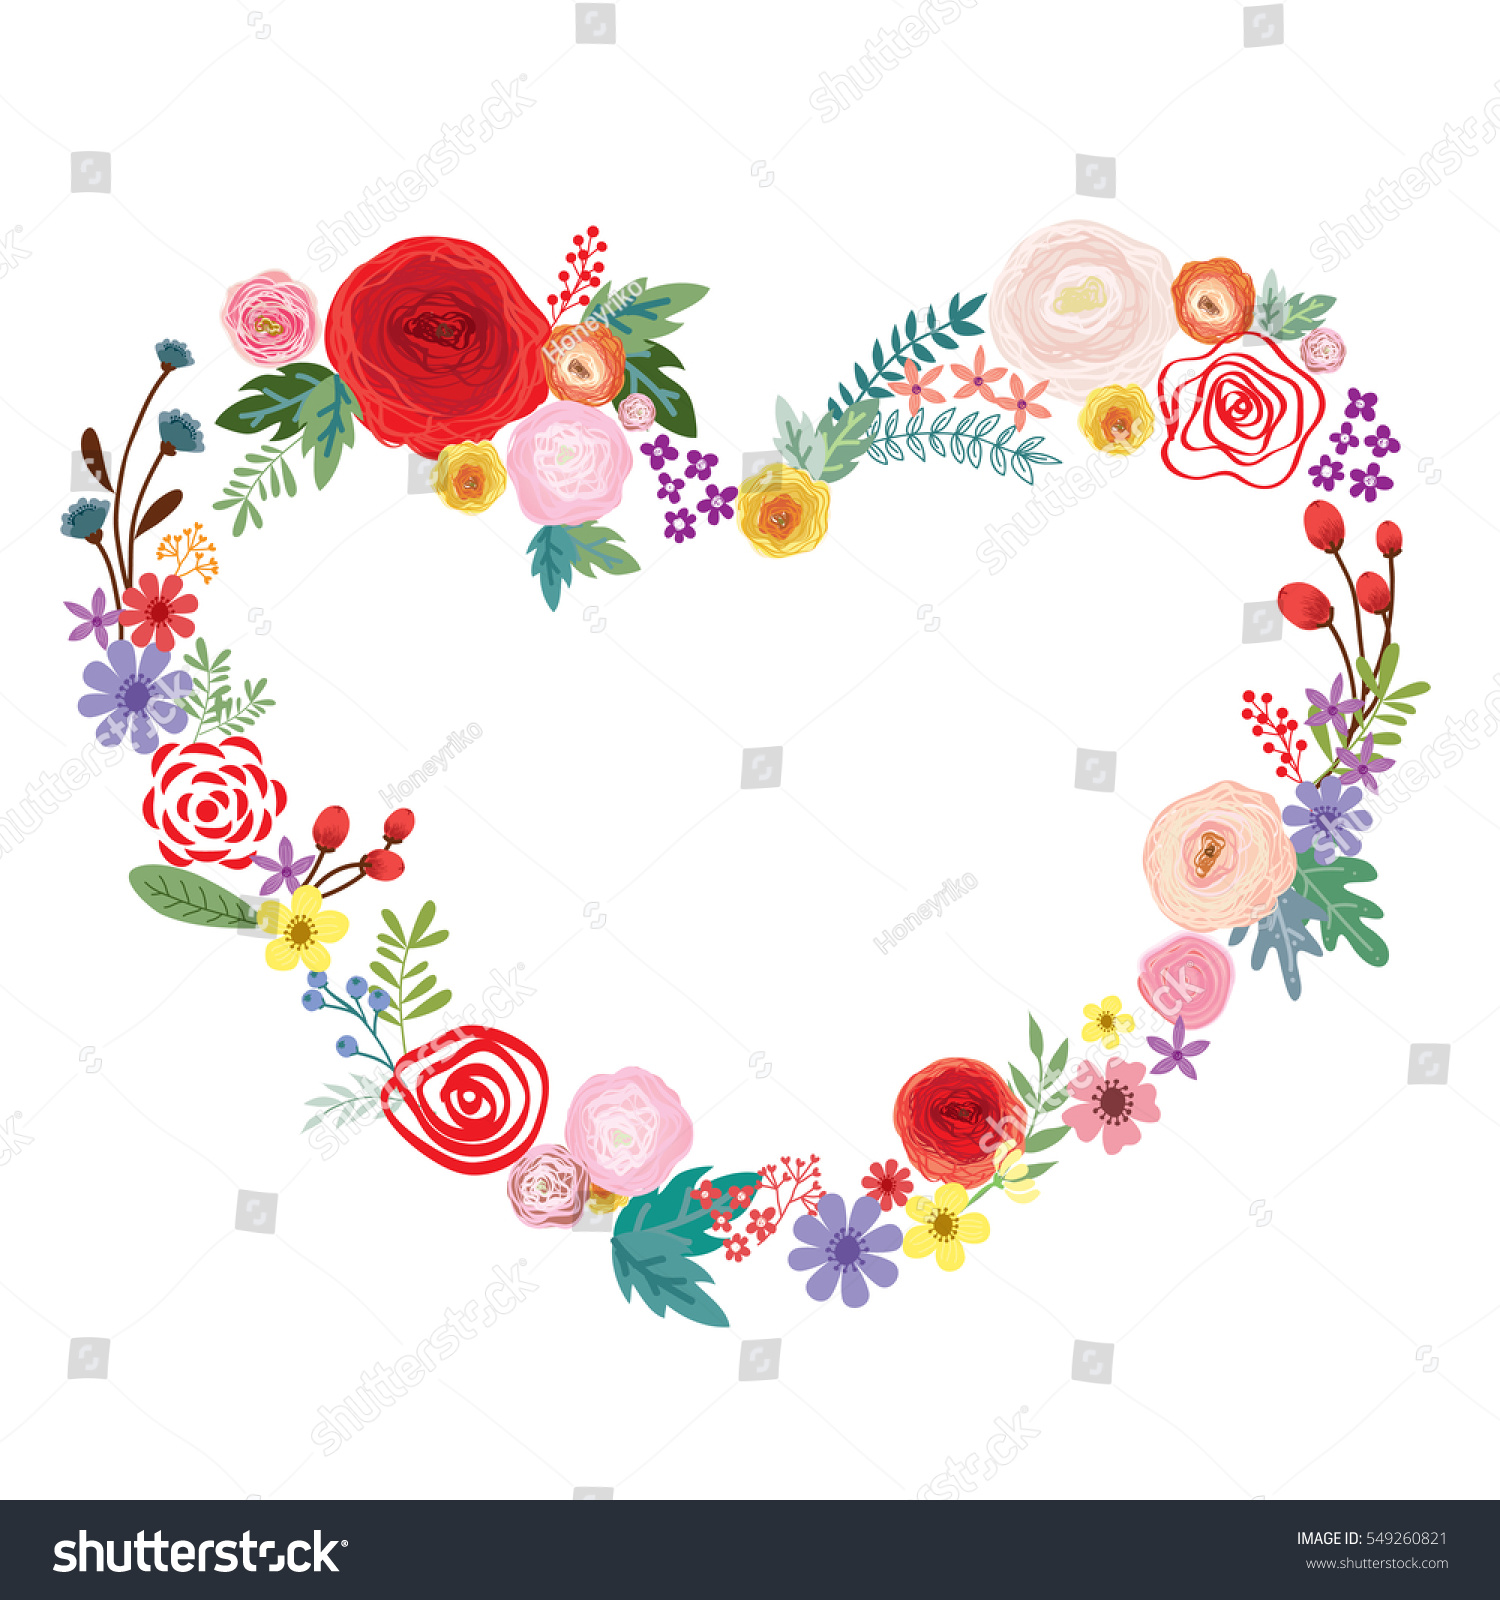 Download Vector Illustration Beautiful Floral Border Heart Stock ...